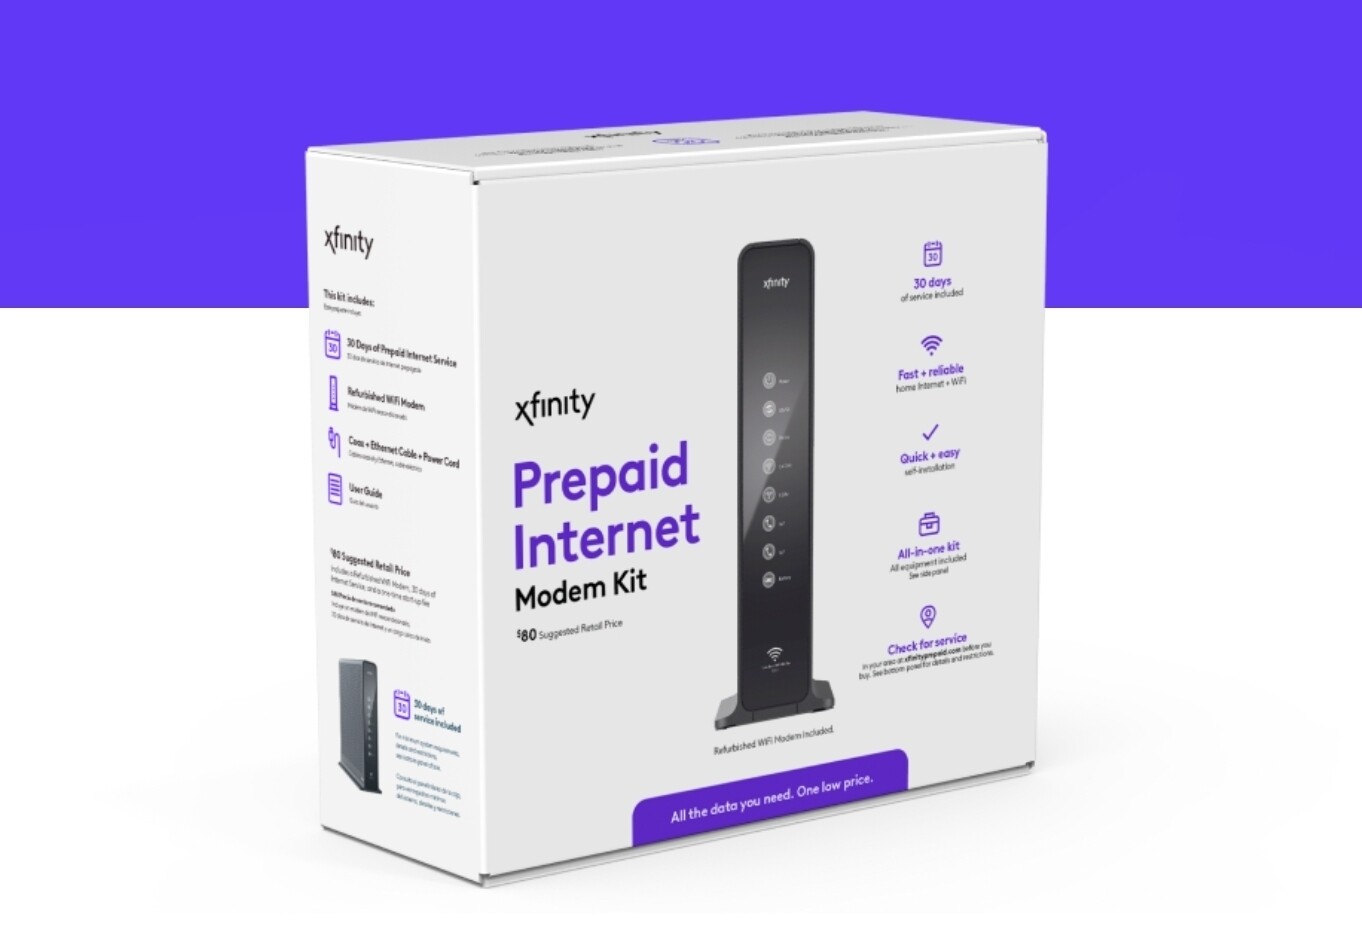 Xfinity Prepaid Internet Starter Kit